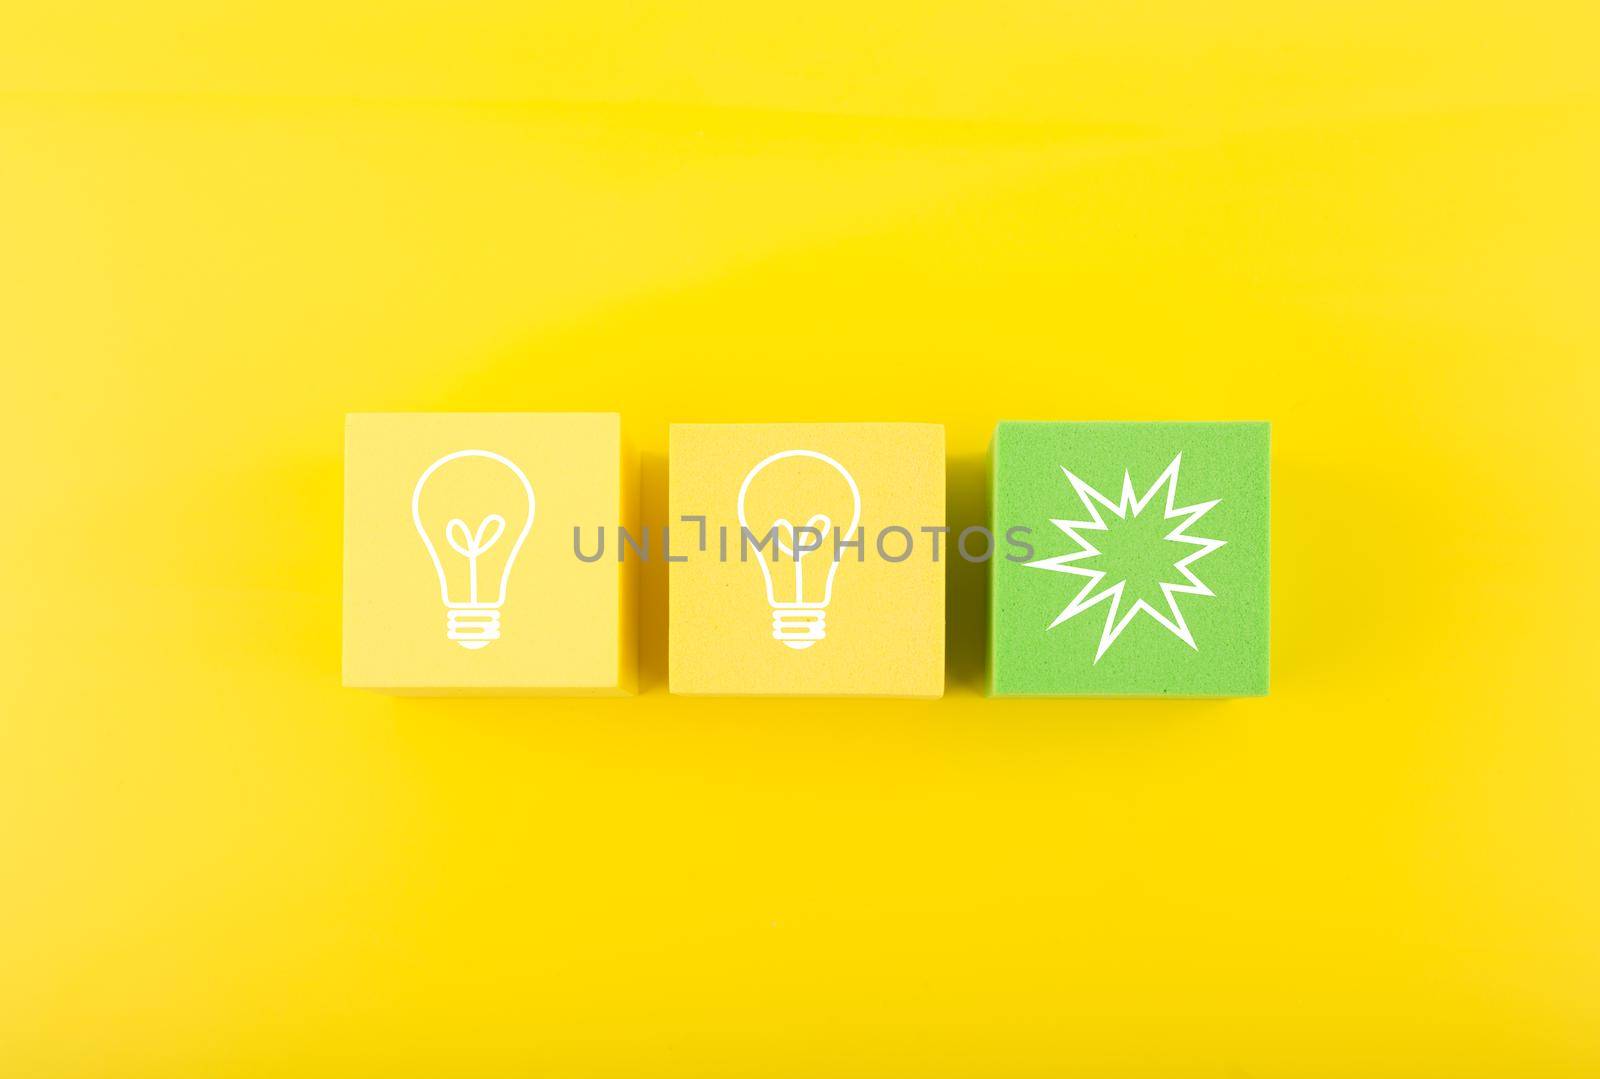 Creativity concept. Light bulbs on yellow and green toy blocks against bright yellow background by Senorina_Irina